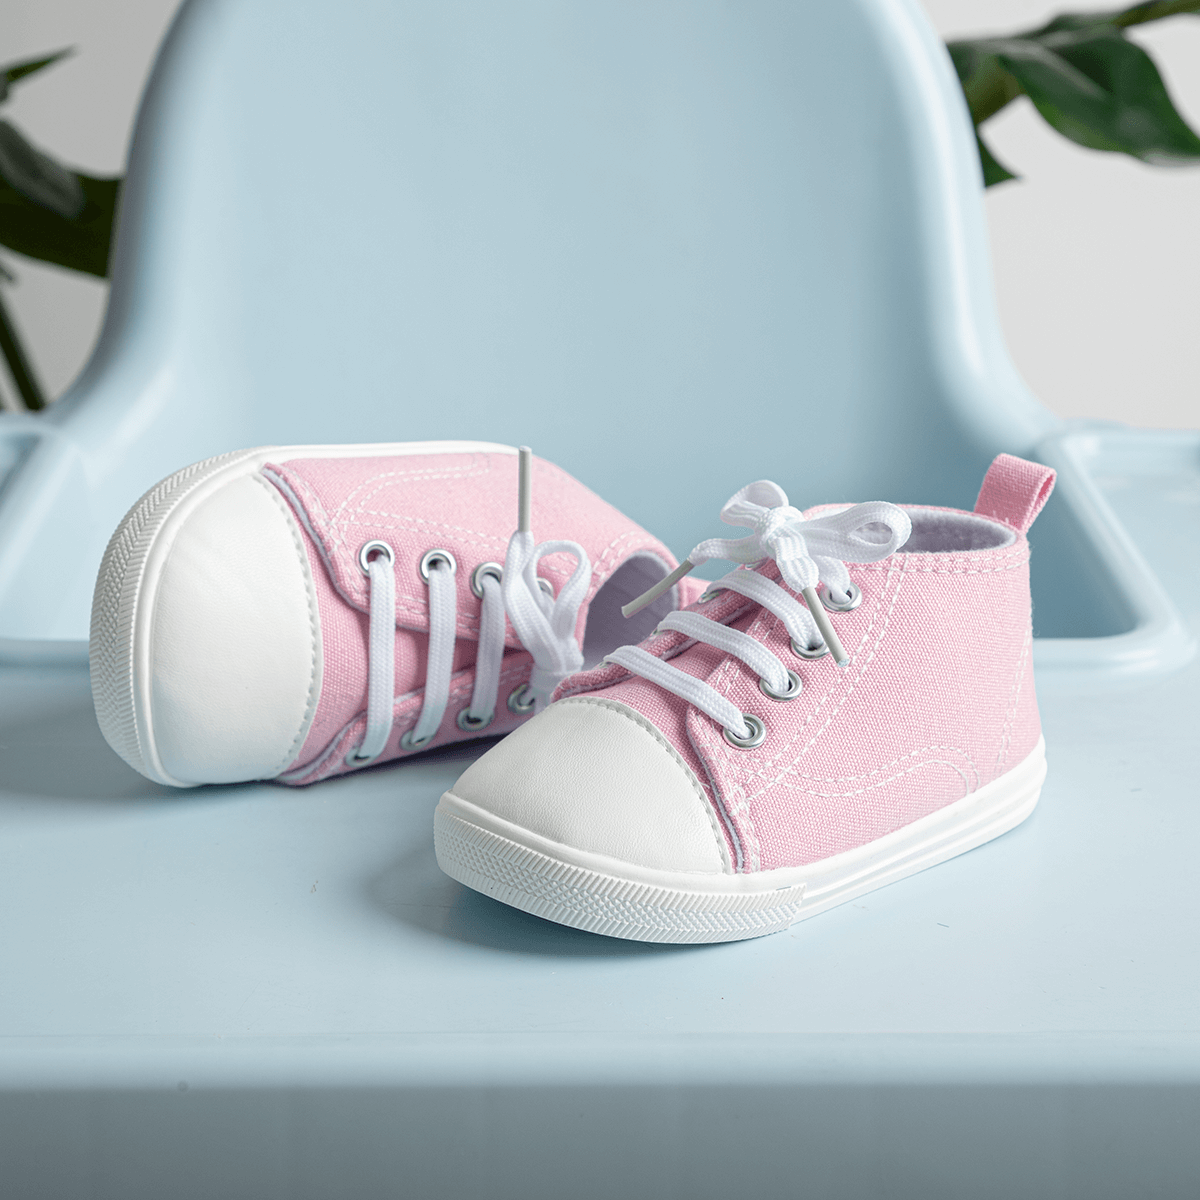 Leo 1st Walker Baby Shoes - Pink